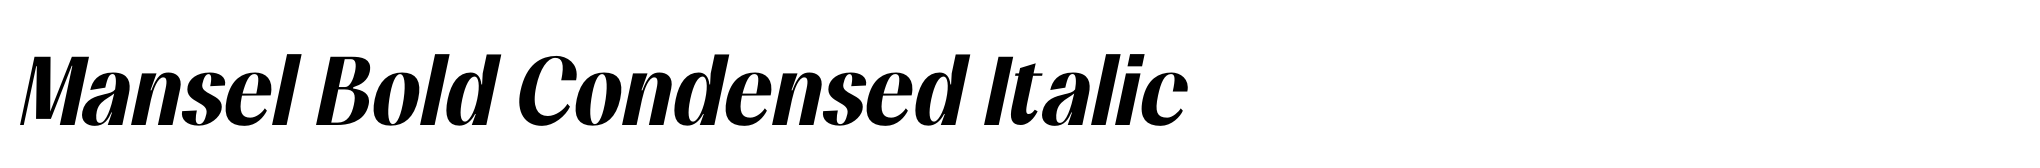 Mansel Bold Condensed Italic image